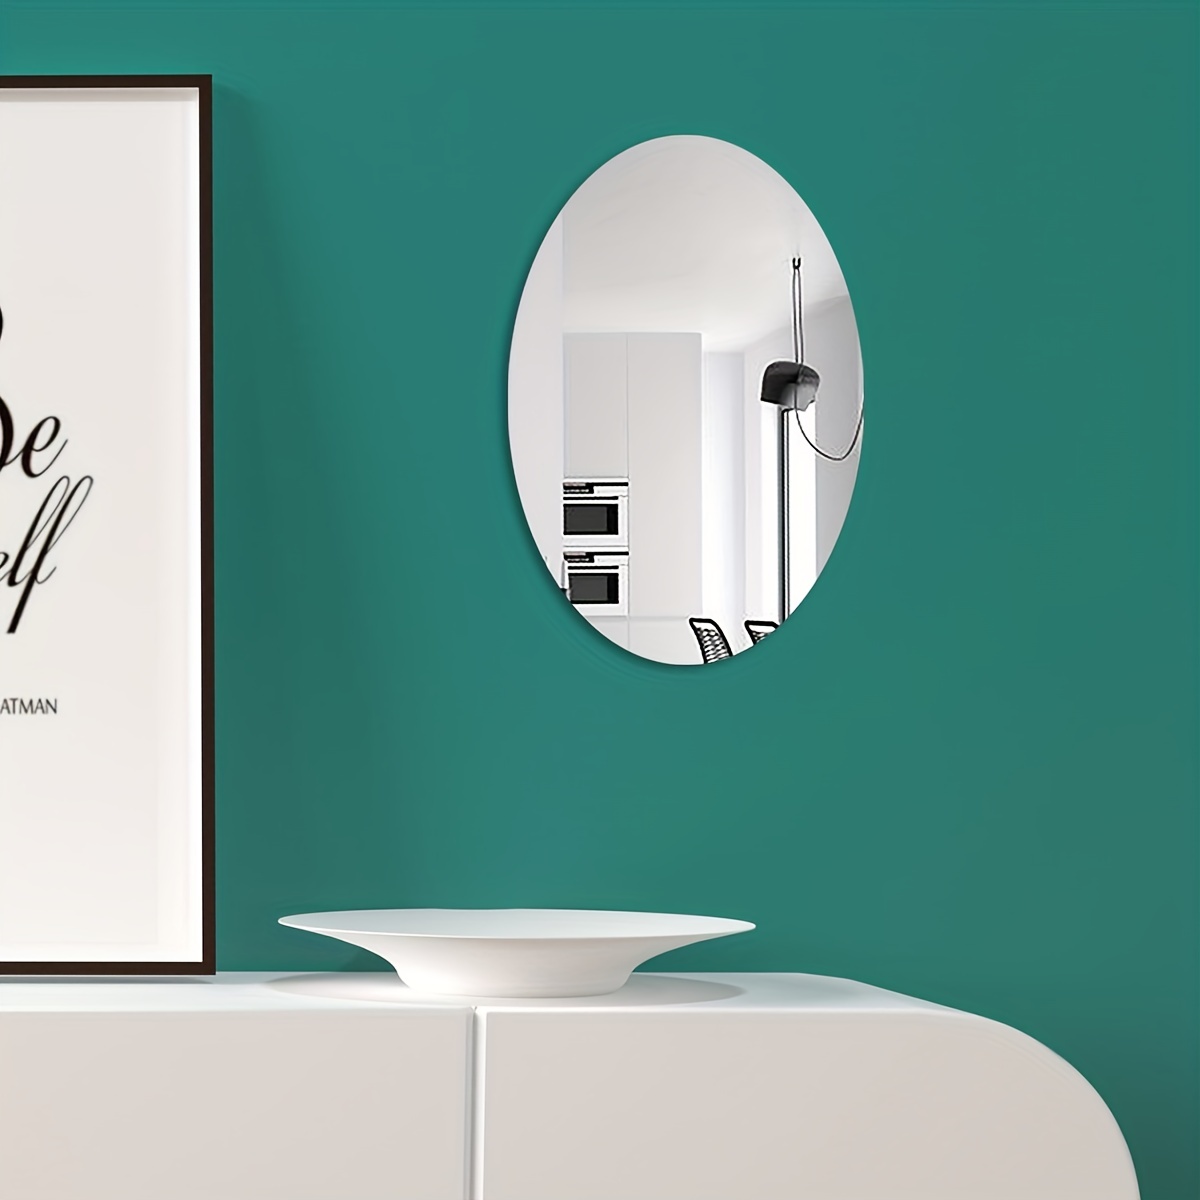  TOLOVIC Selbstklebende Fliesenspiegel Acrylspiegel HD  Klebespiegel Spiegel Selbstklebende Spiegel Wanddekoration Wandspiegel  Selbstklebend Spiegelfliesen Selbstklebend 4 Stück, 30 x 30 cm